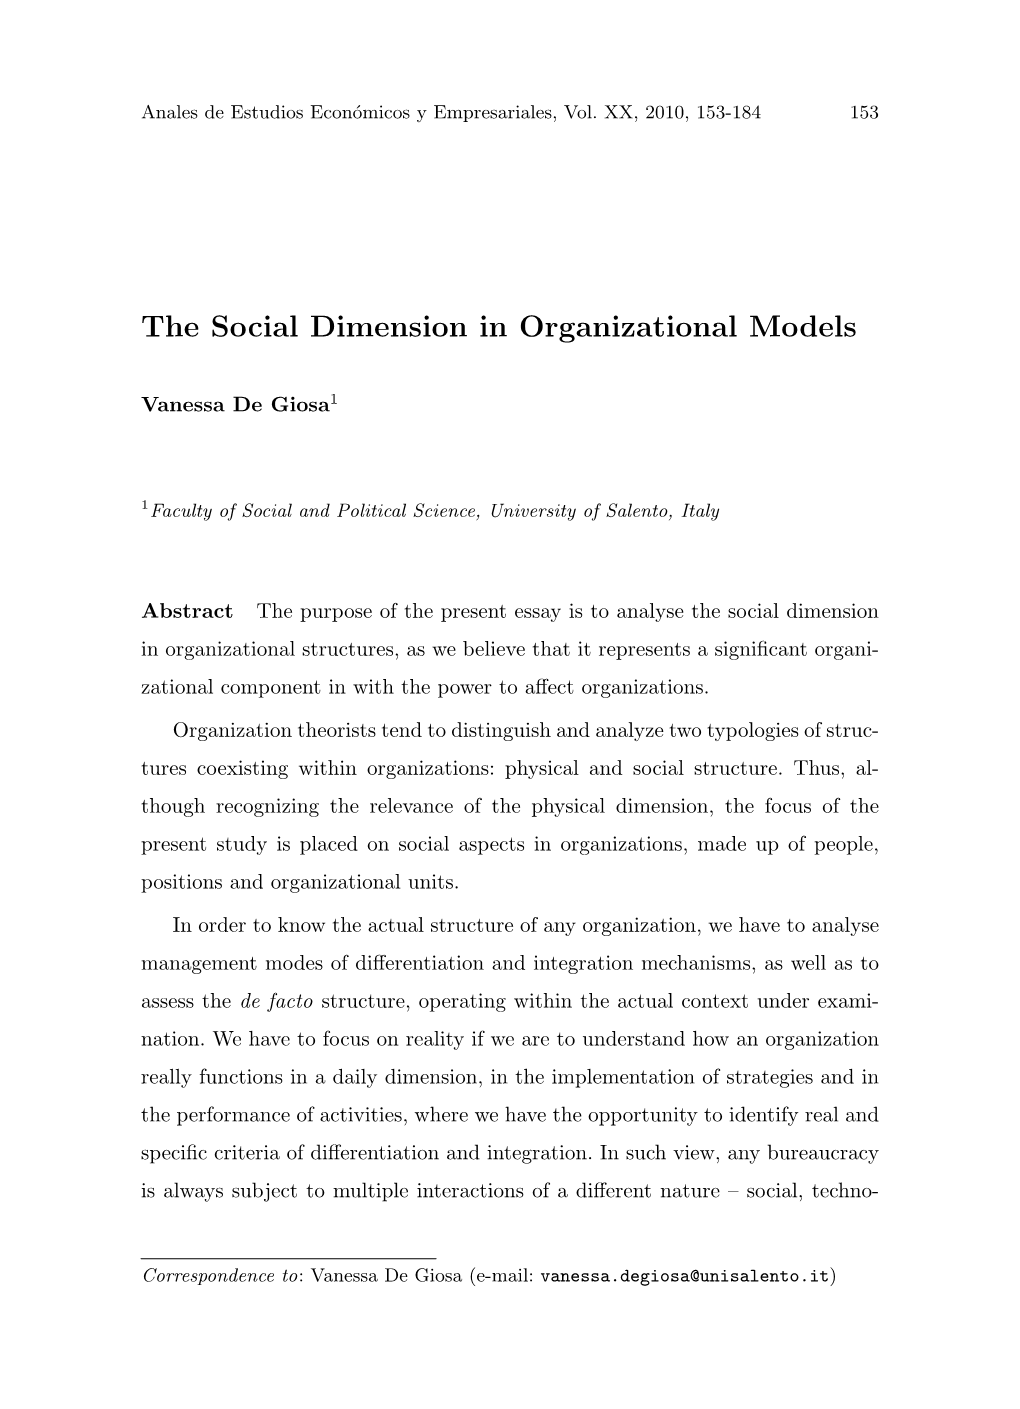 The Social Dimension in Organizational Models